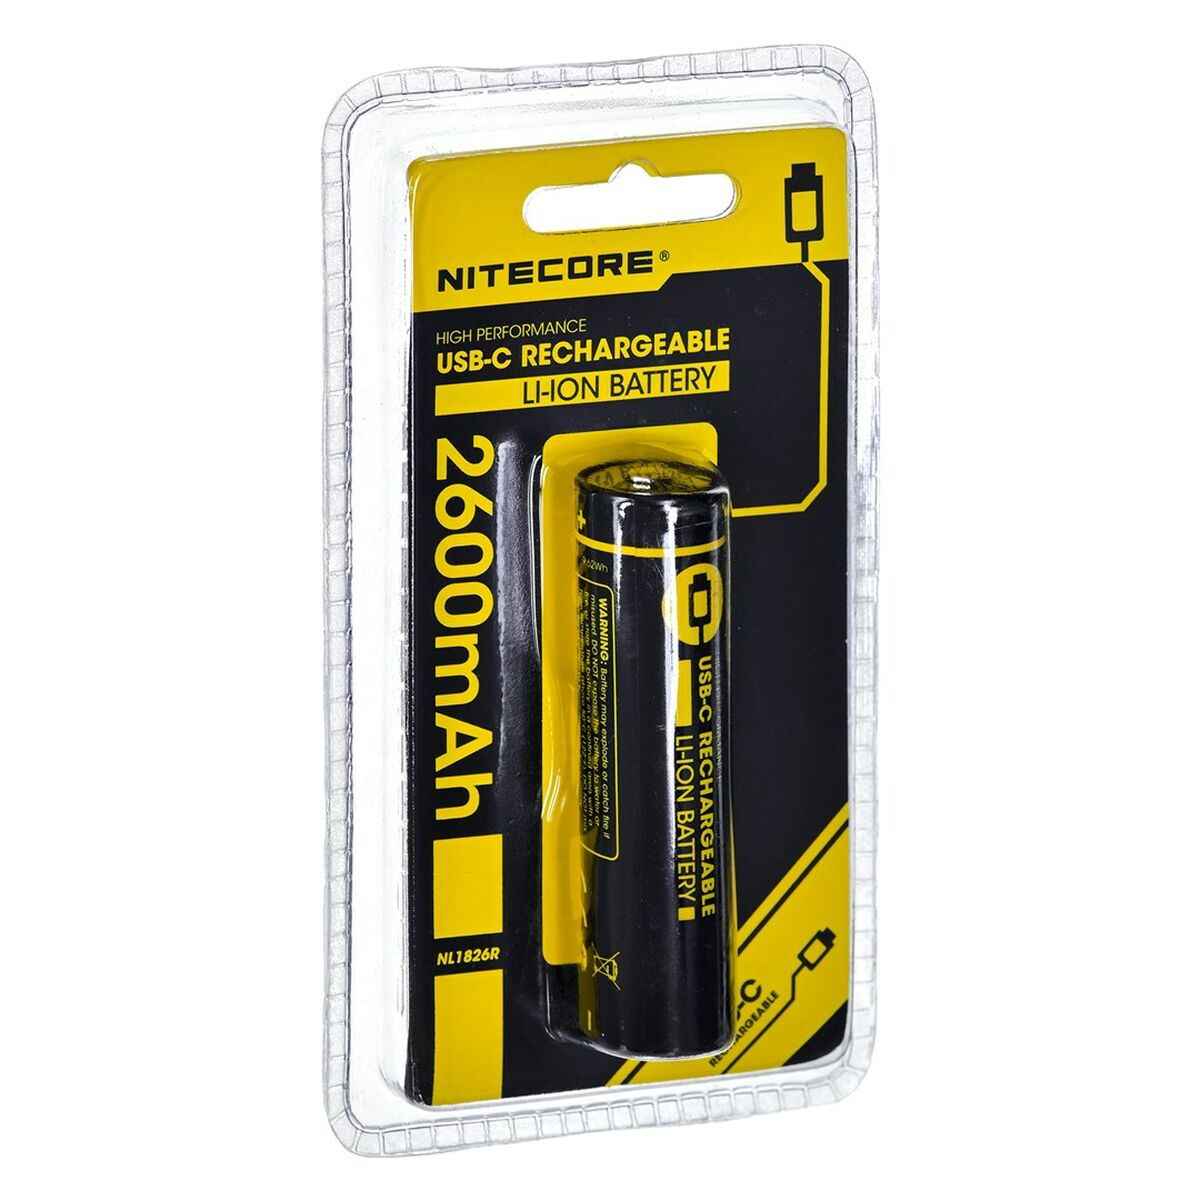 NITECORE Wiederaufladbare Batterie Akkus NT-NL1826R